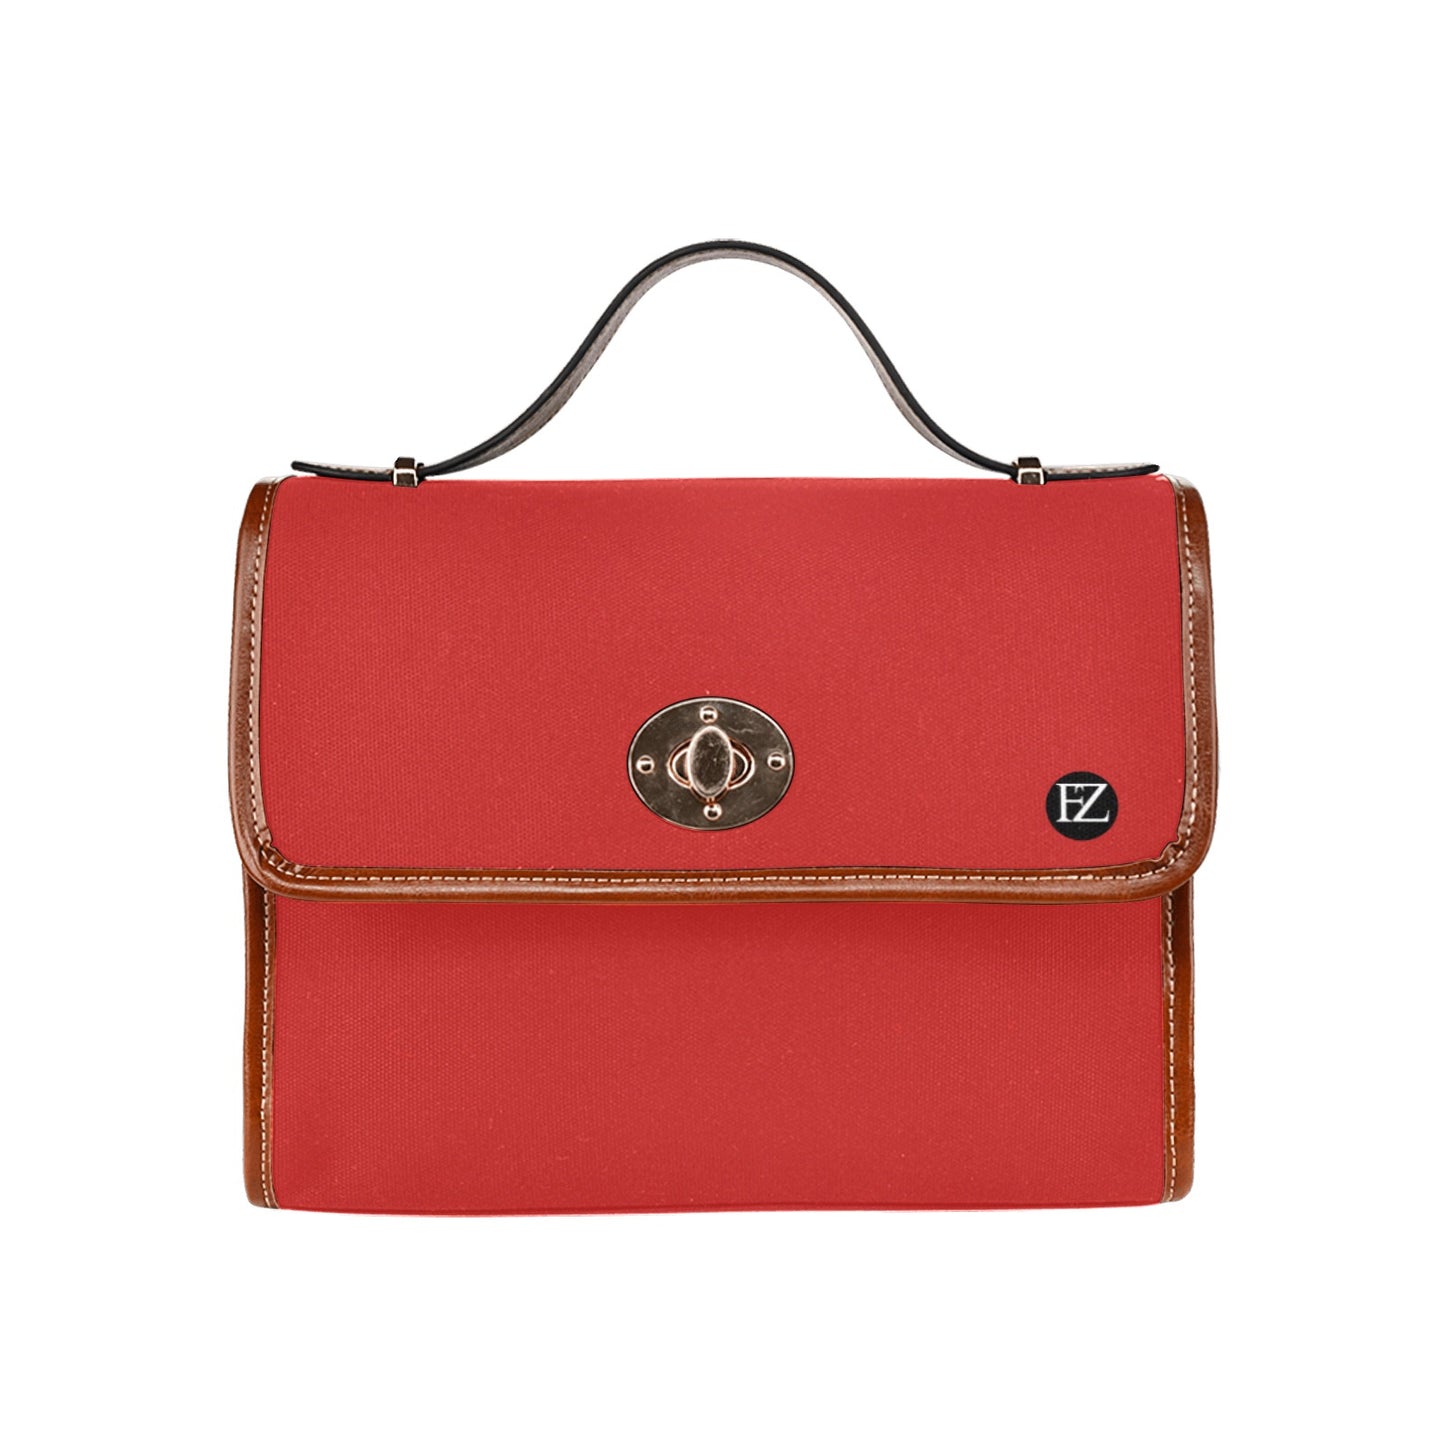 fz original handbag one size / fz 0riginal handbag - red all over print waterproof canvas bag(model1641)(brown strap)